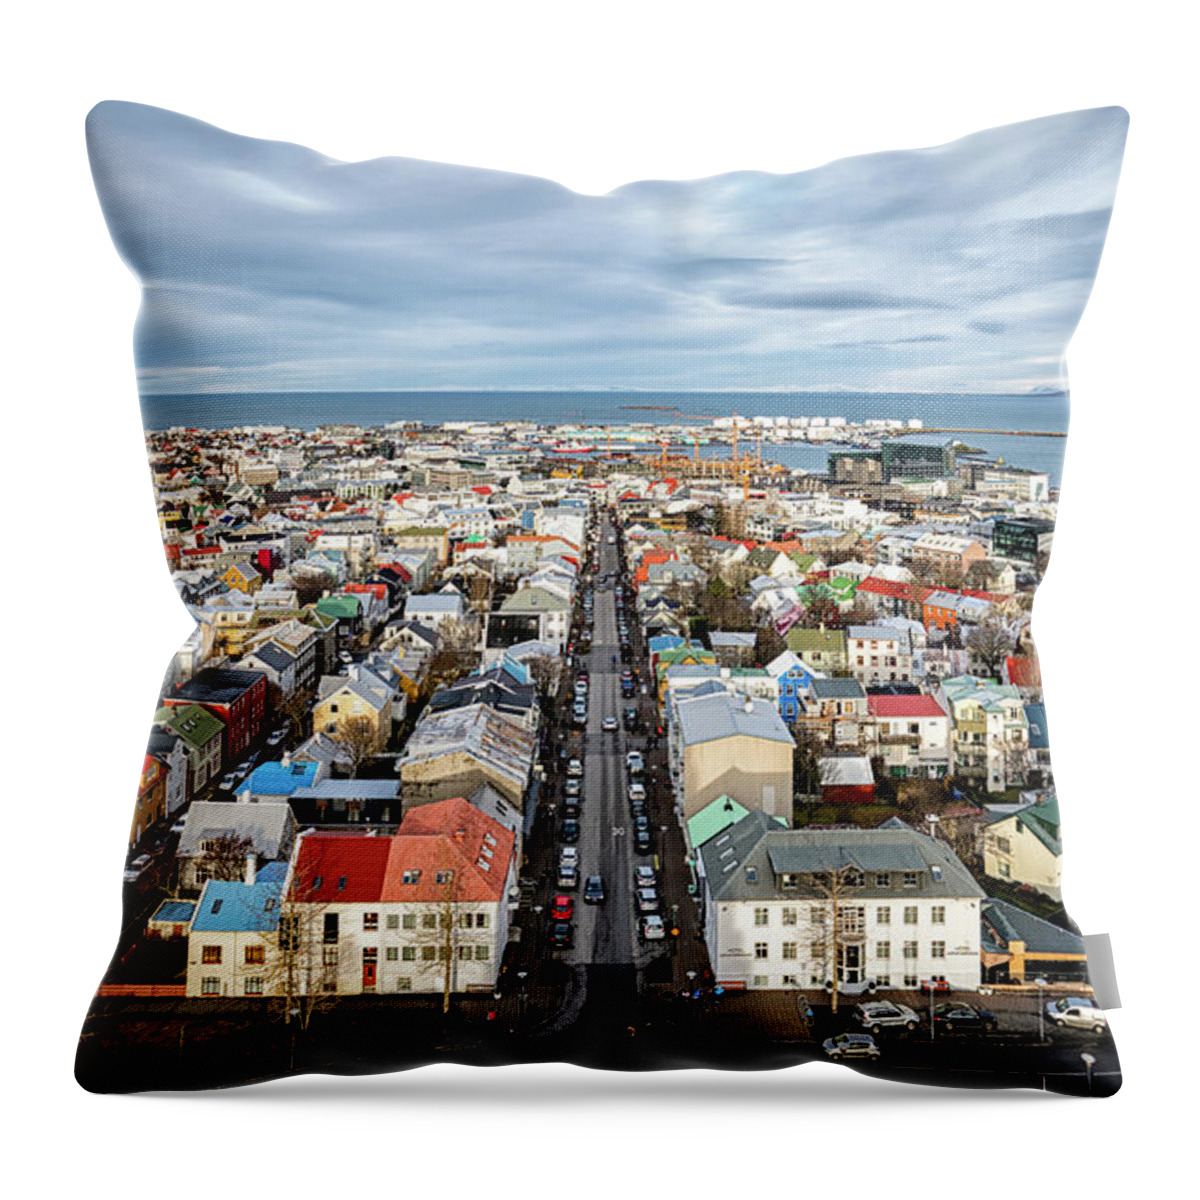 Hallgrimskirkja Throw Pillow featuring the photograph Reykjavik City 1 by Nigel R Bell